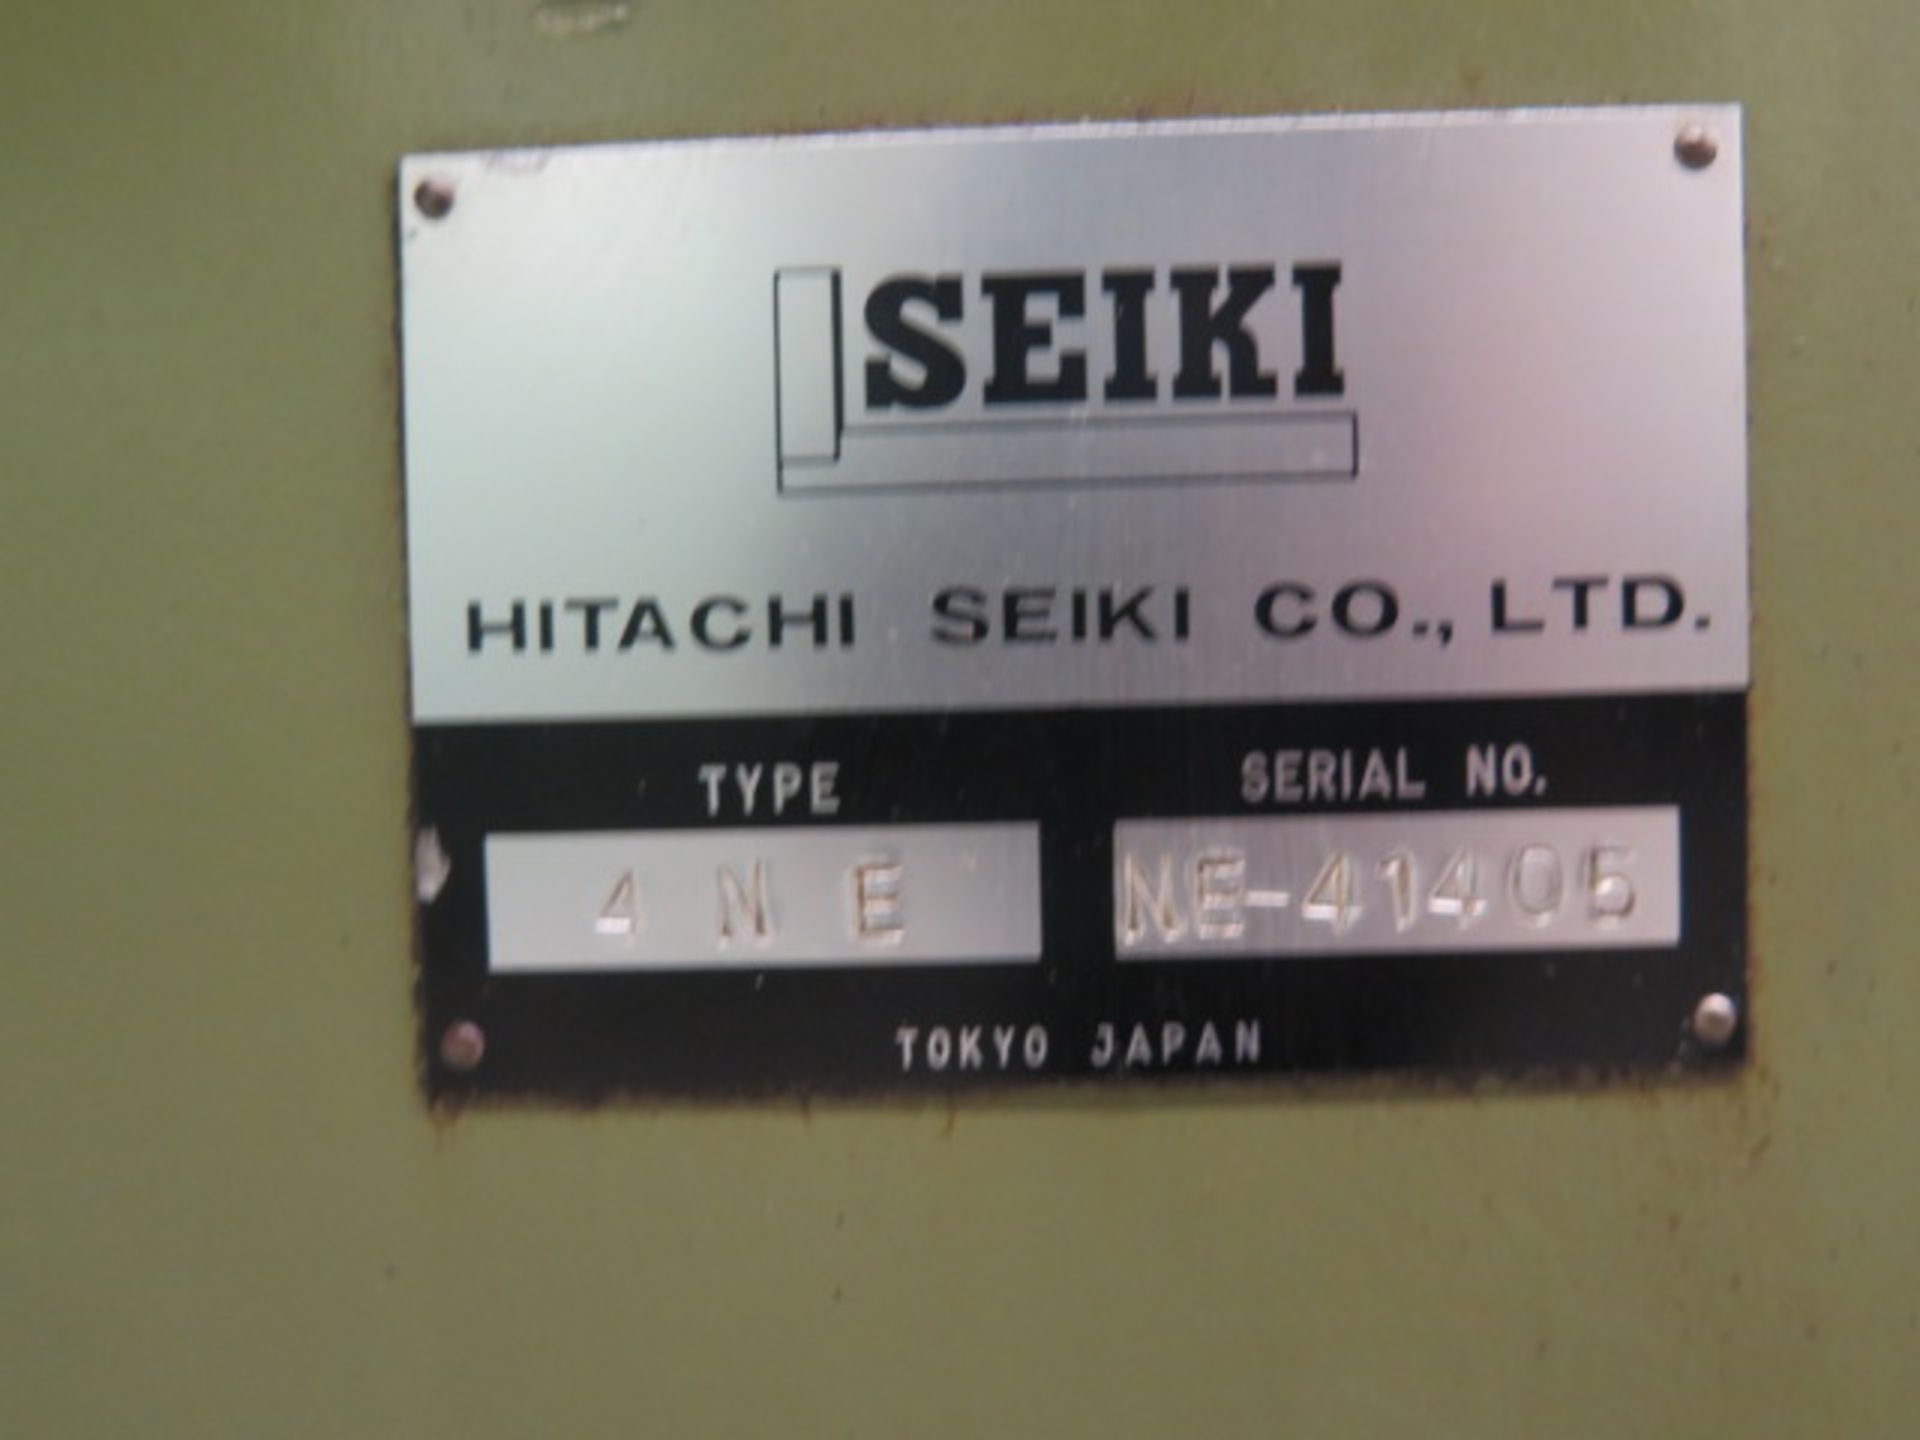 Hitachi Seiki 4NE-600 CNC Turning Center s/n NE-41405 w/ Fanuc System 6T Controls, 12-Station - Image 10 of 11